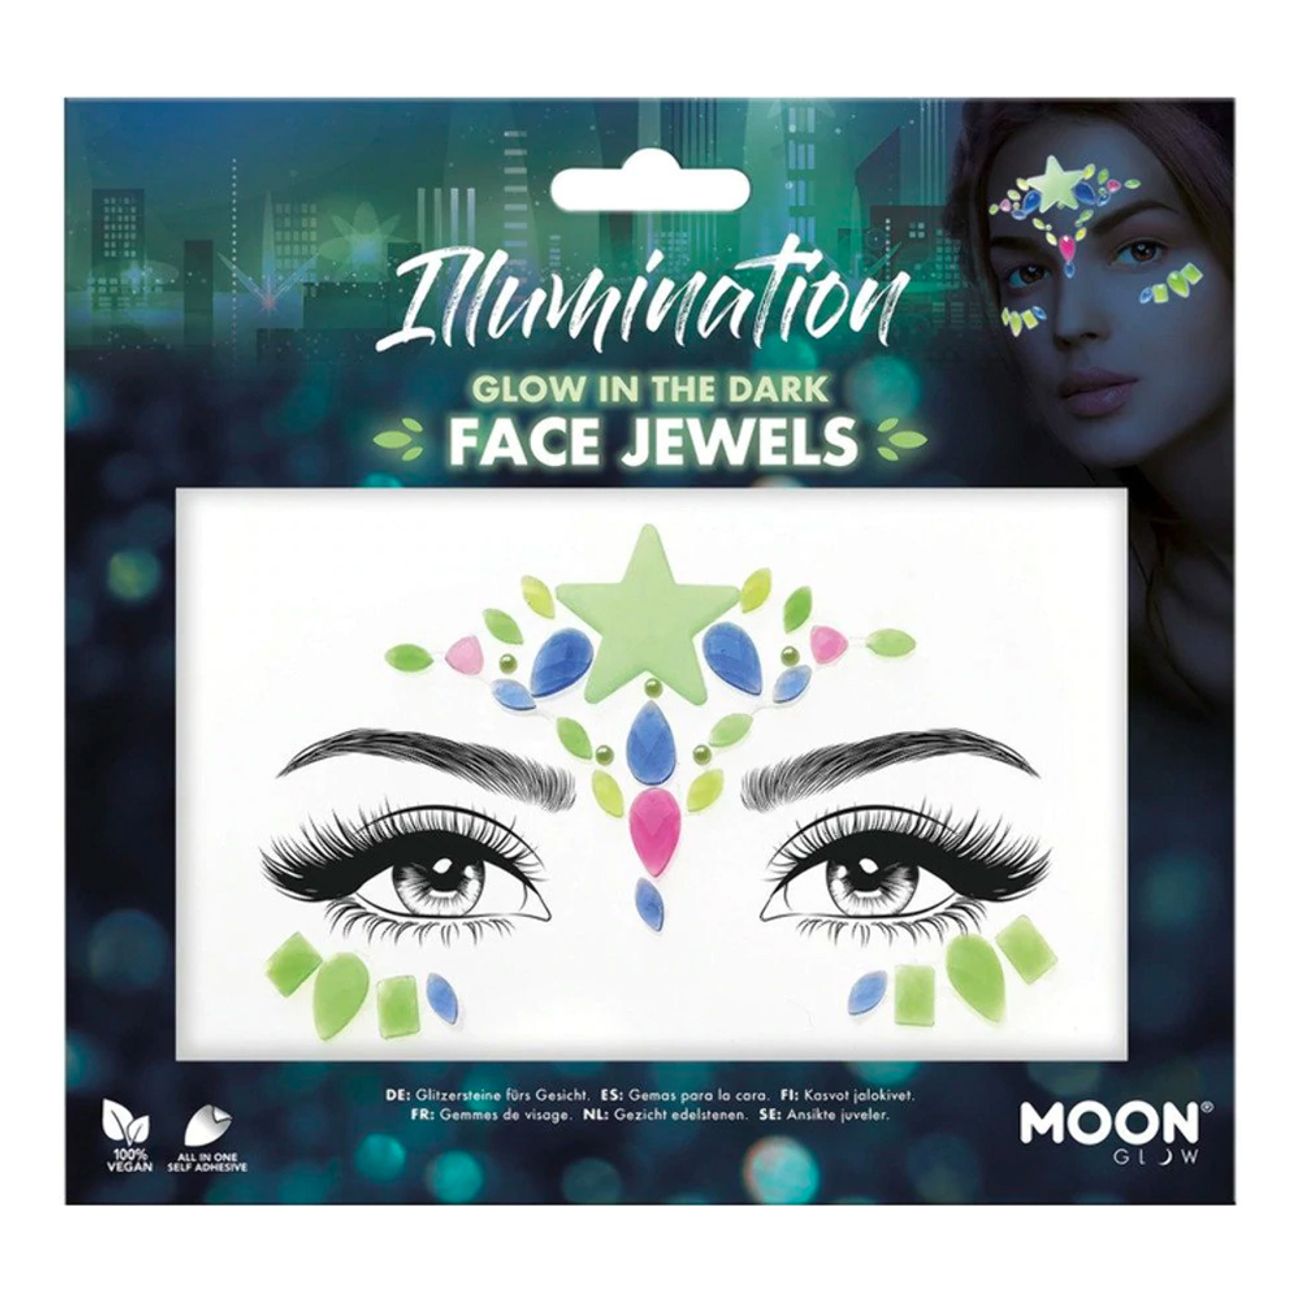 face-jewels-glow-in-the-dark-illumination-84451-1